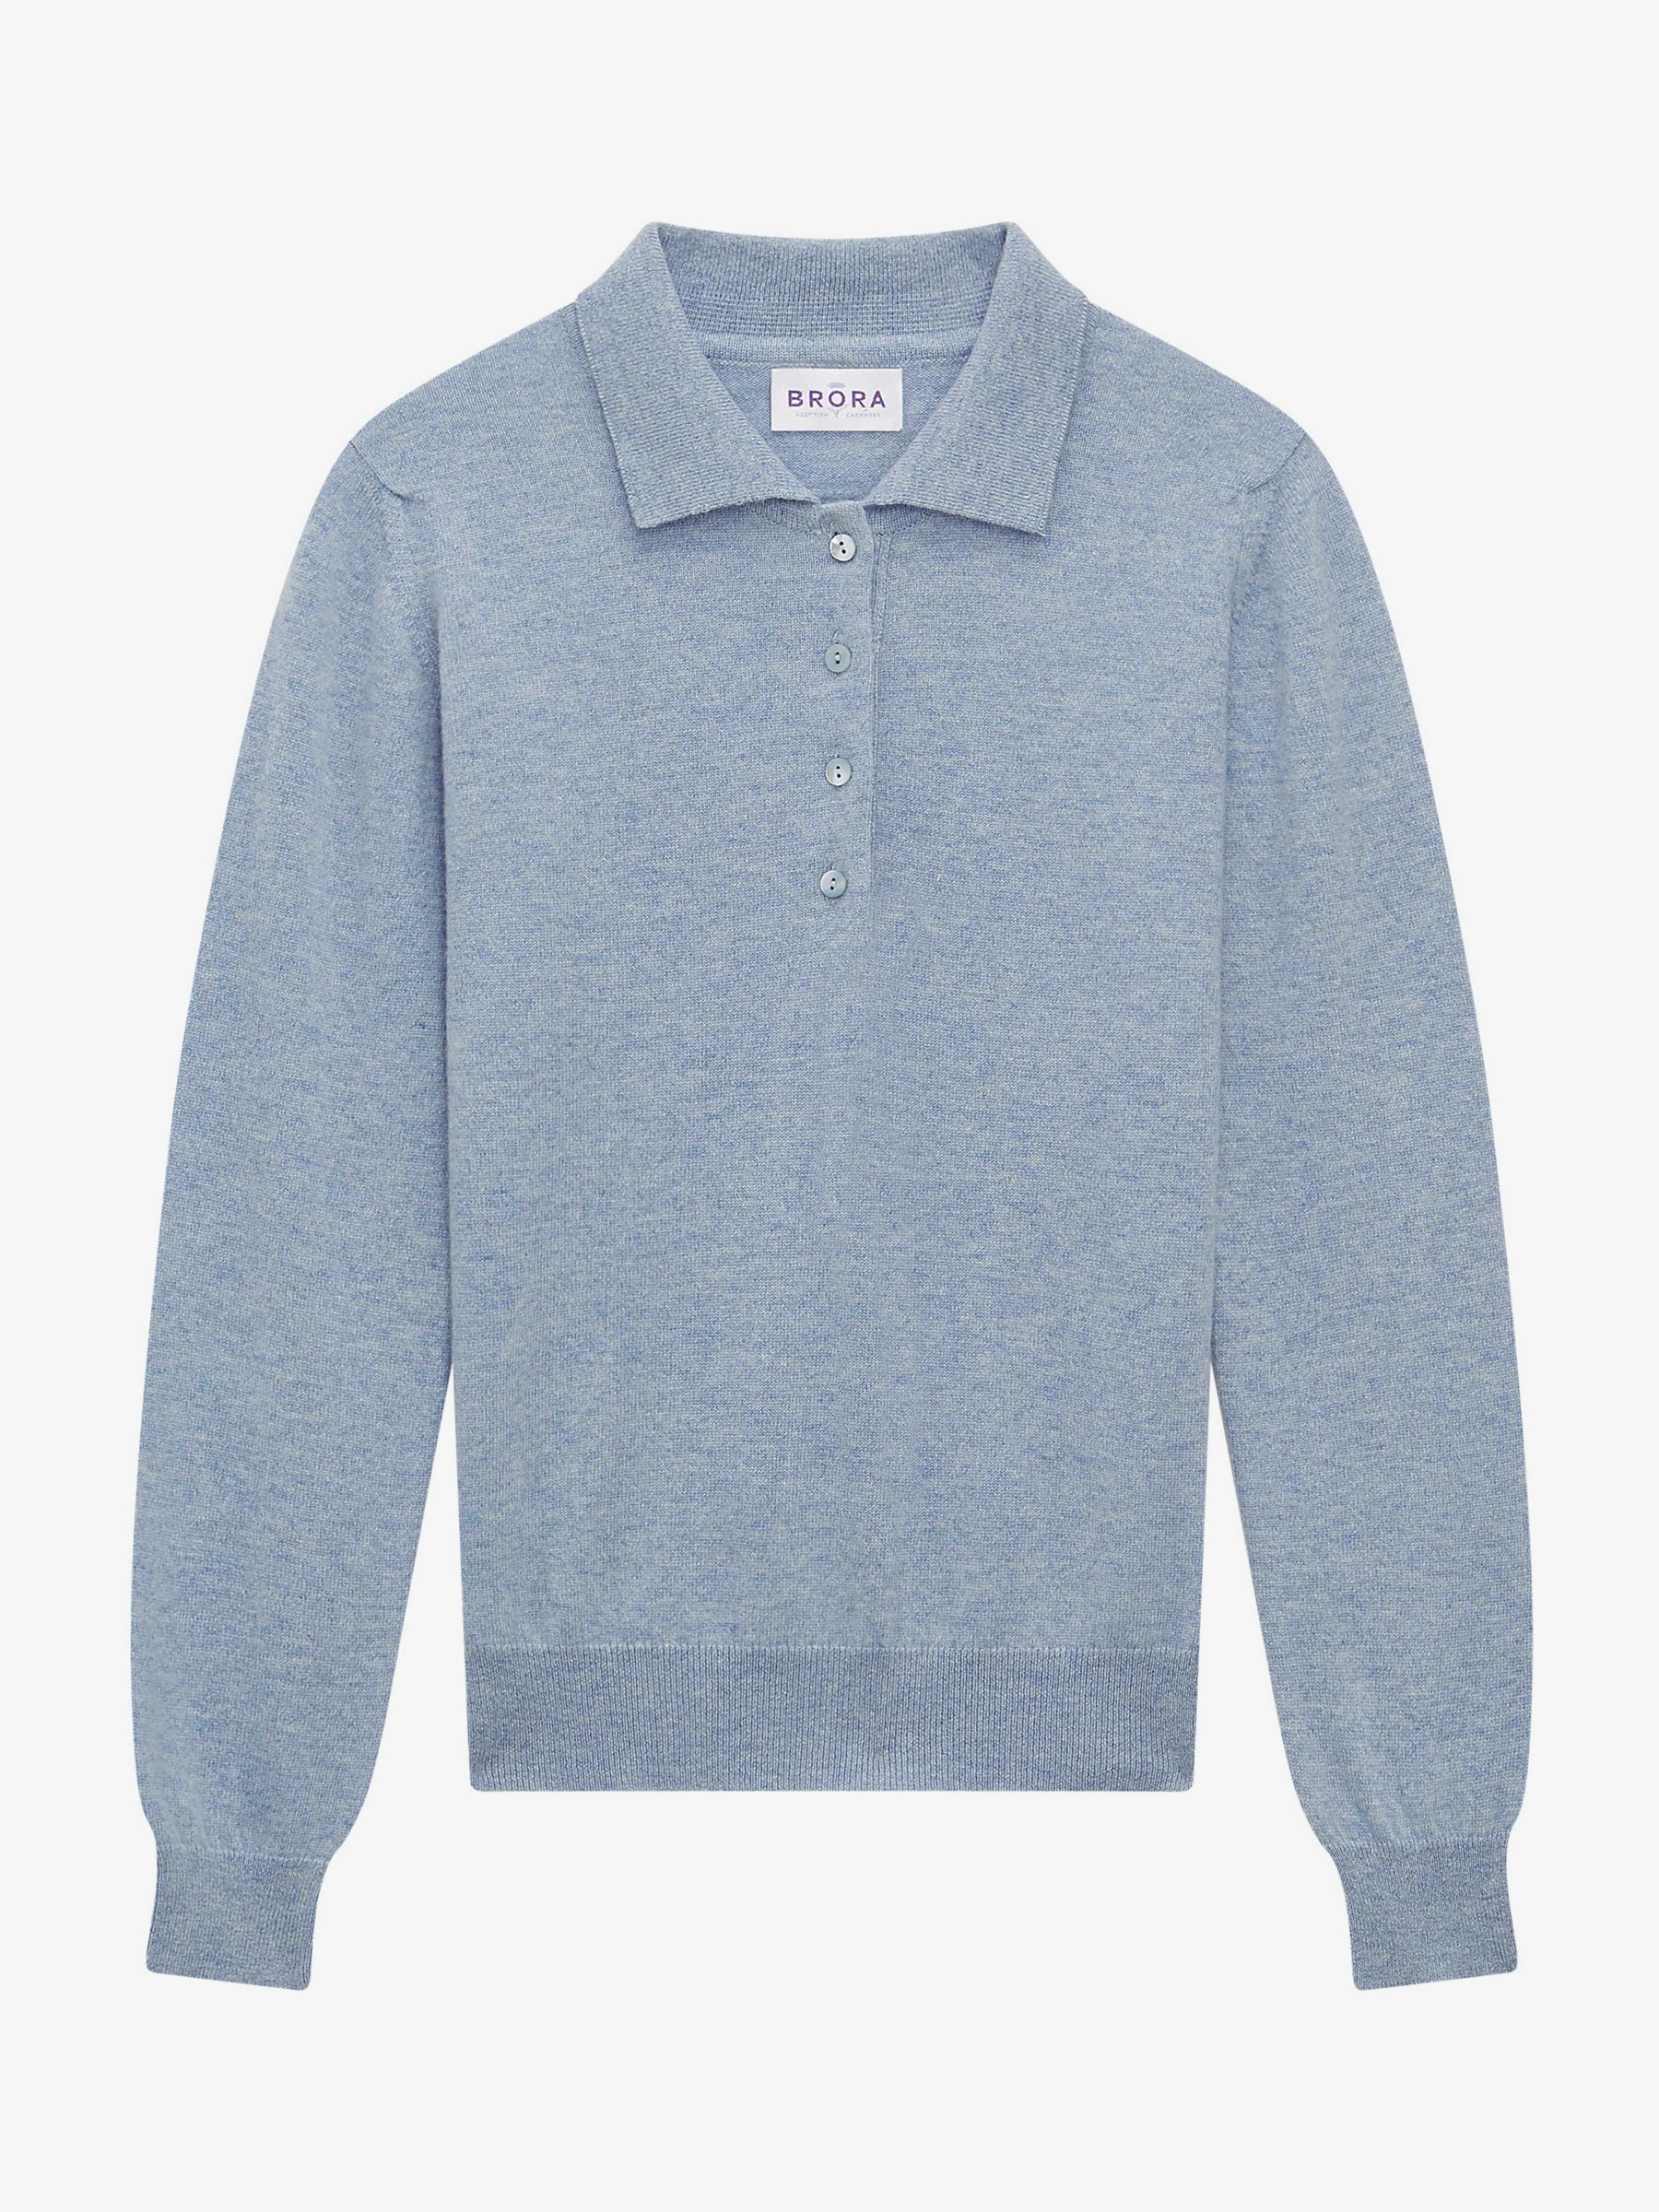 Brora Cashmere Polo Shirt, Glacier, 8